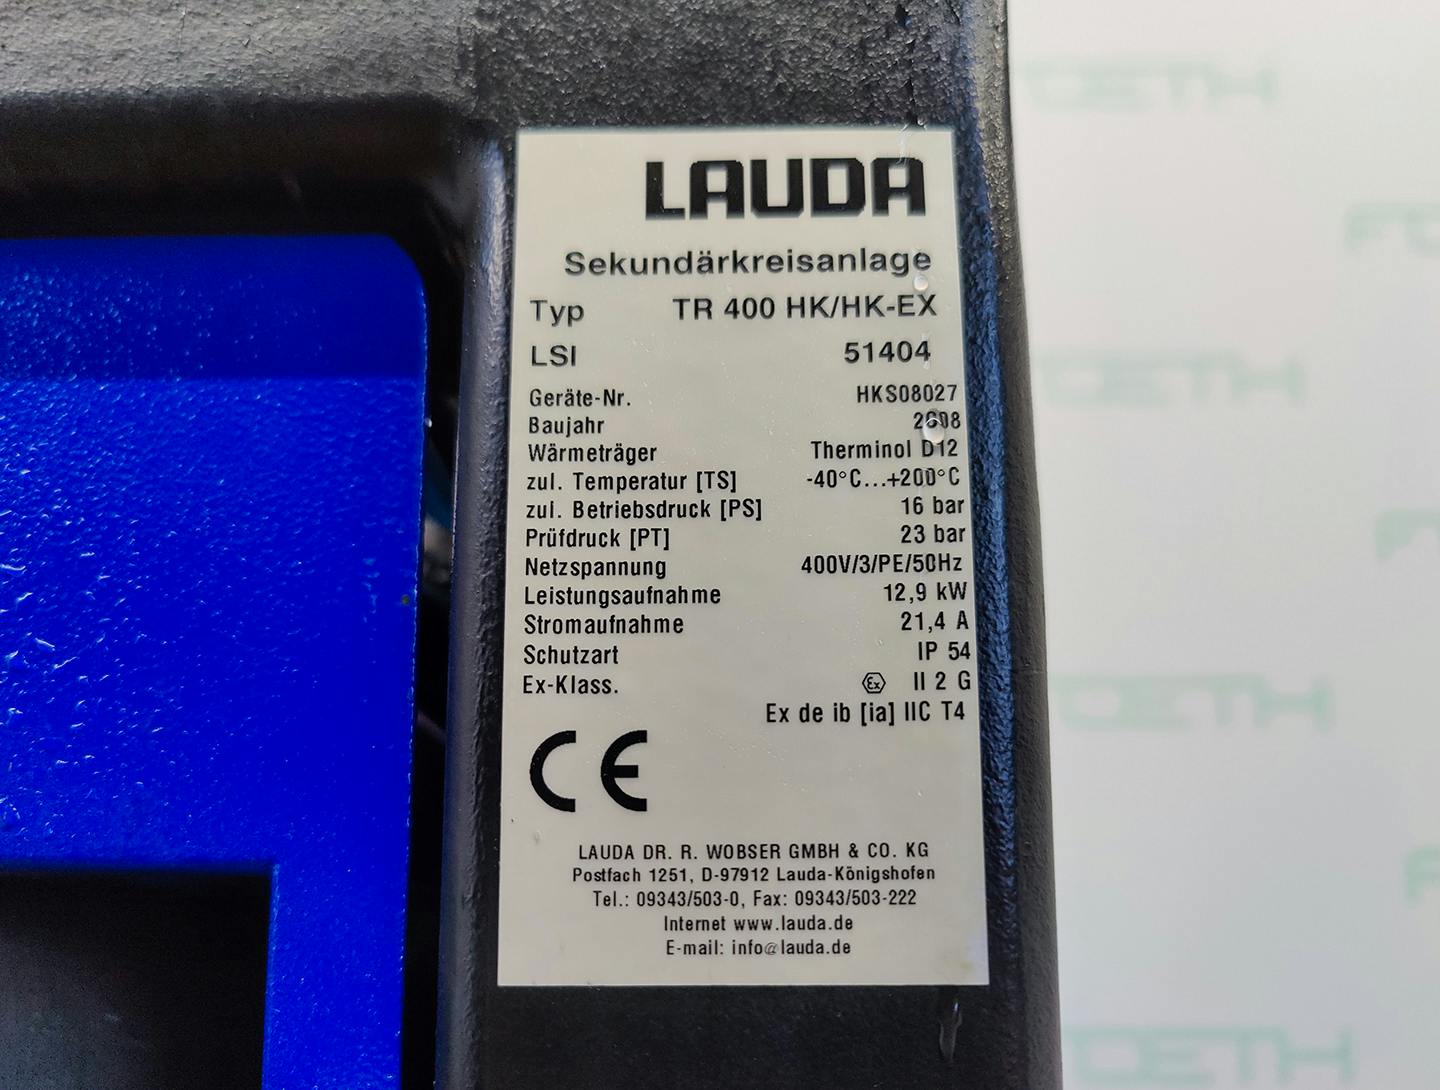 Lauda TR400 HK/HK-EX "secondary circuit system" - Unidade de fluido térmico - image 6